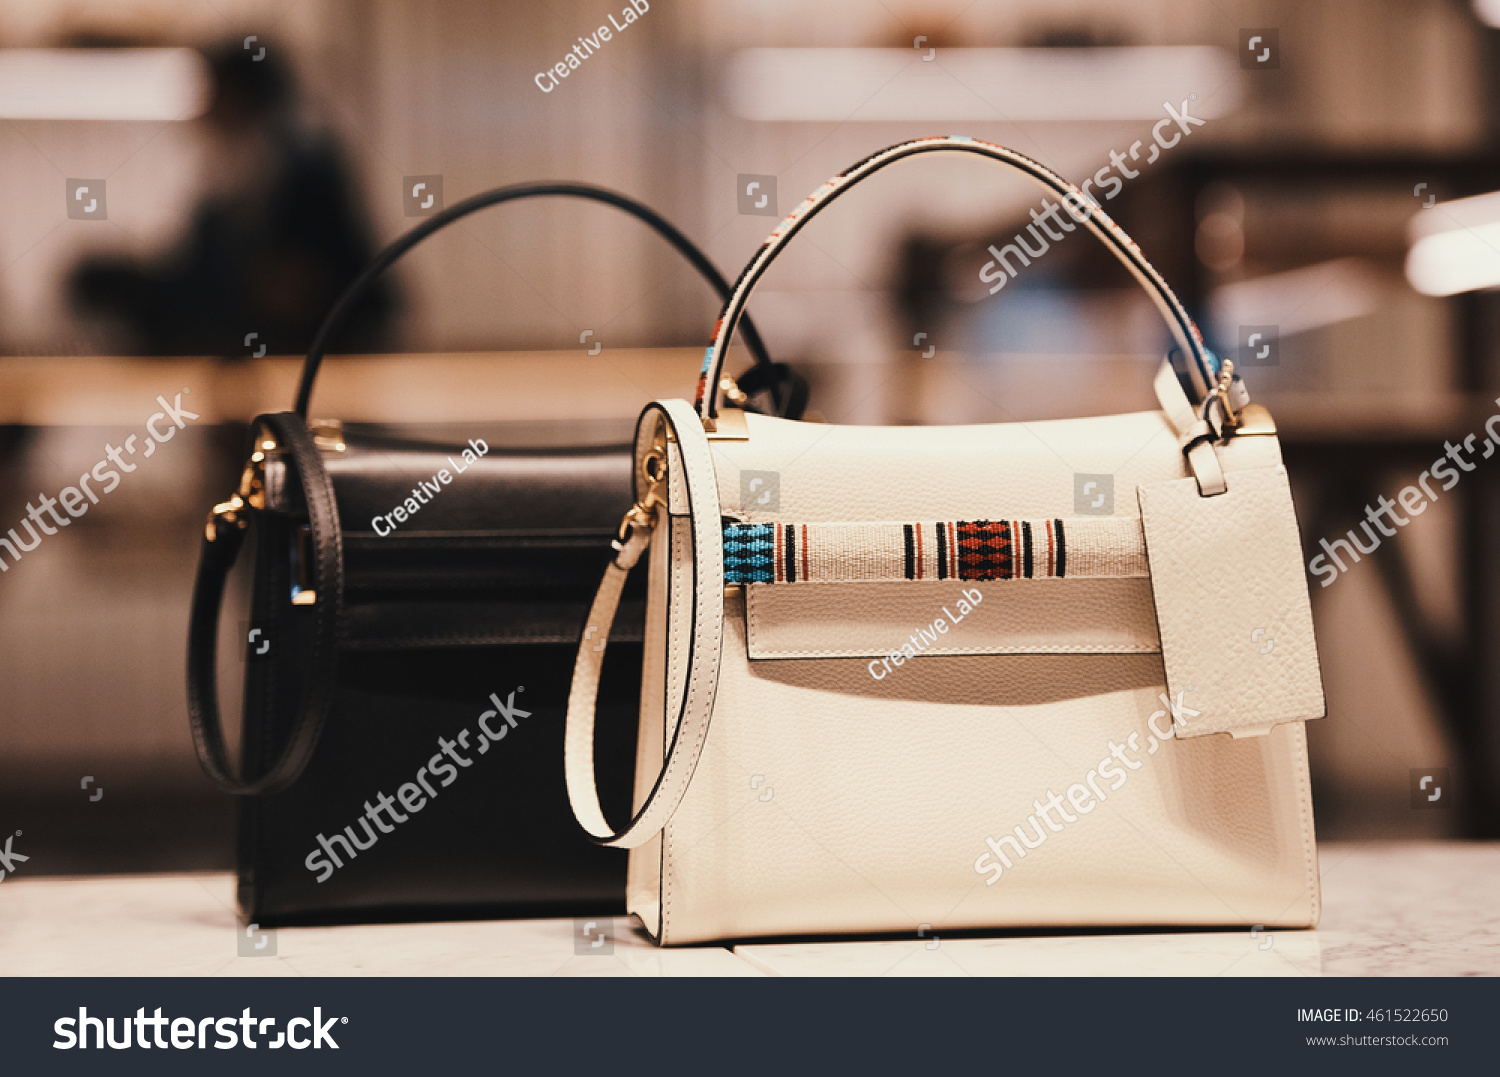 Elegant Handbags Stock Photo 461522650 - Shutterstock